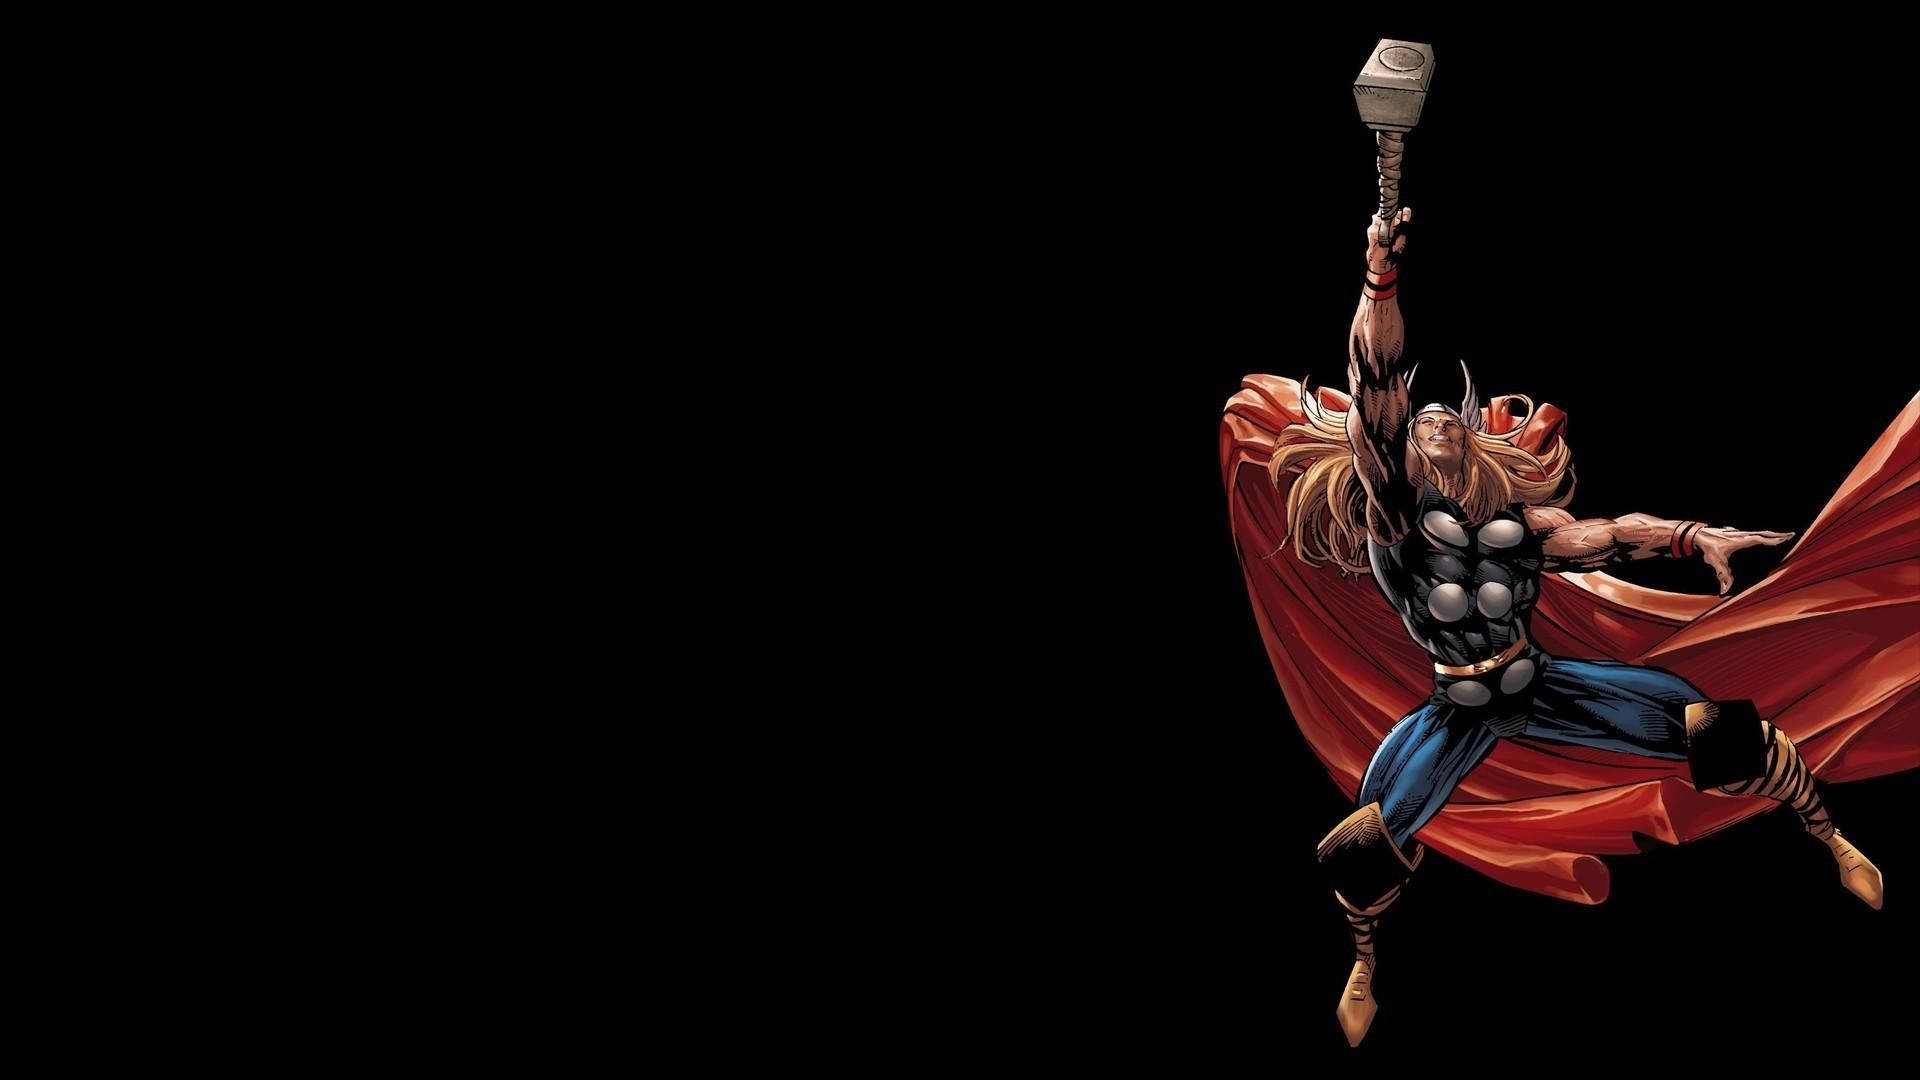 Download Marvel Comics Thor Animated Wallpaper 